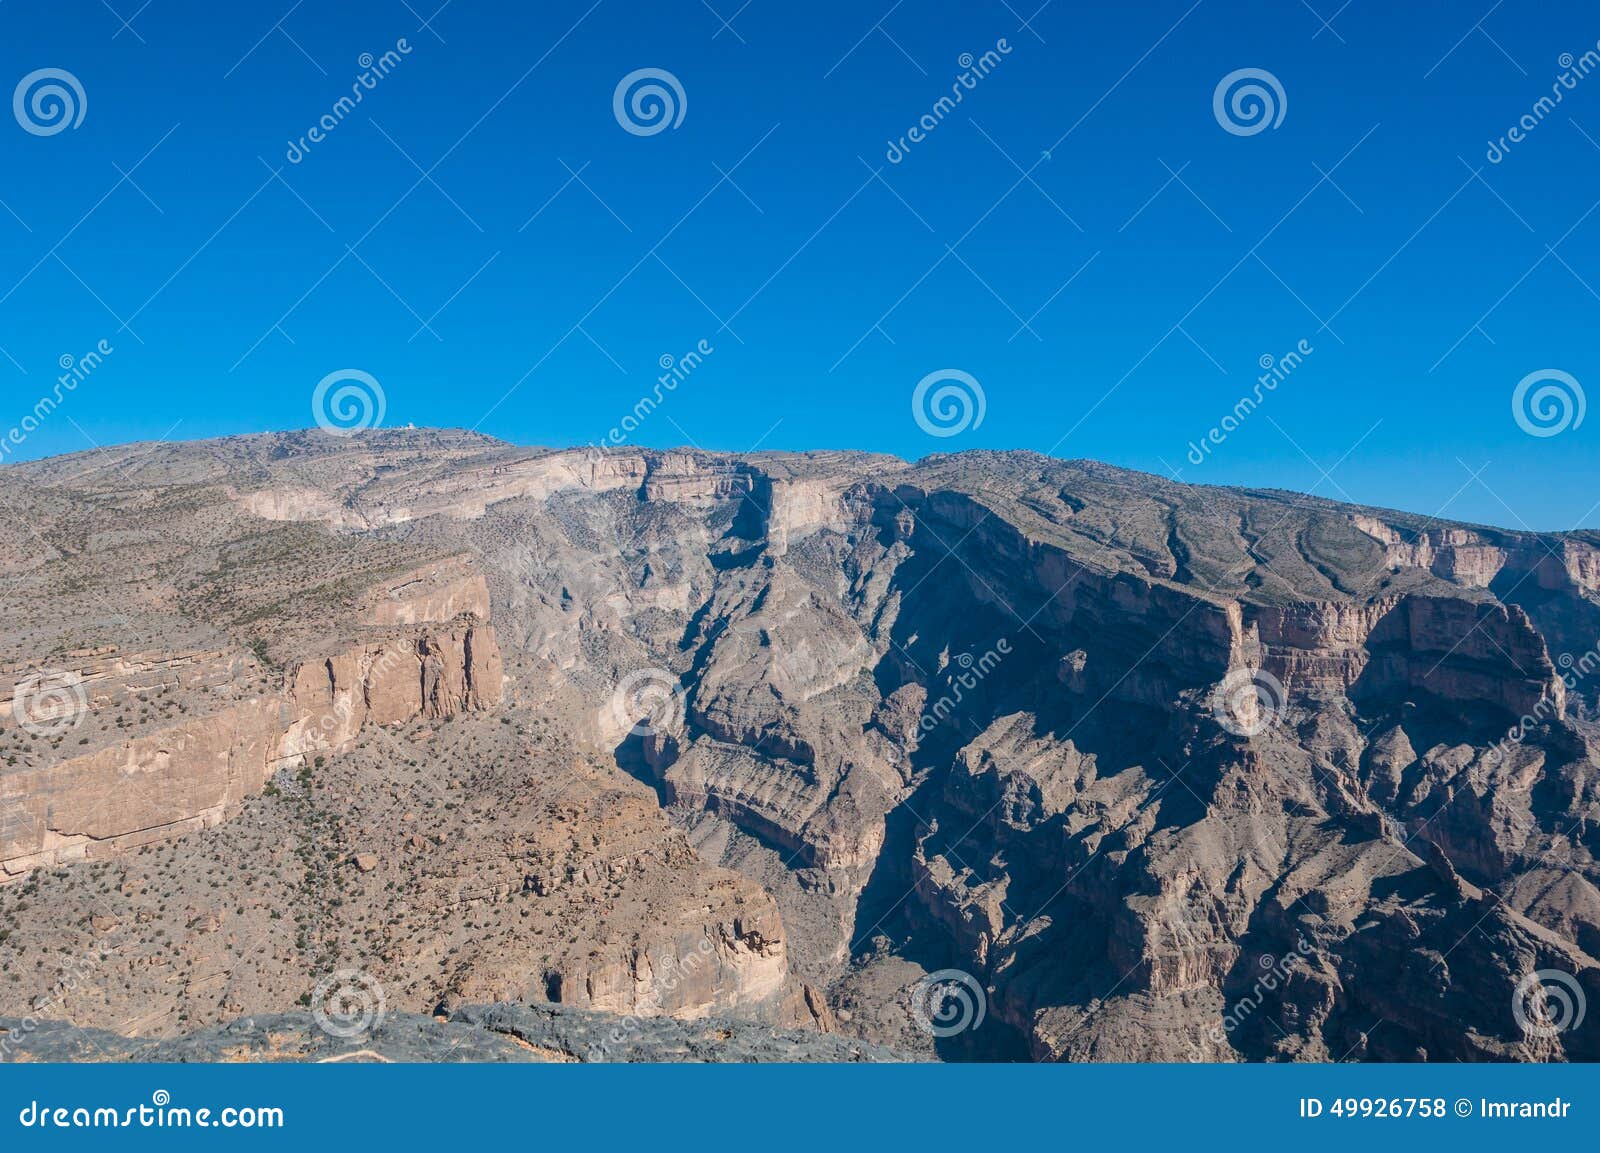 jebel shams, tallest mountain of middle-east, oman